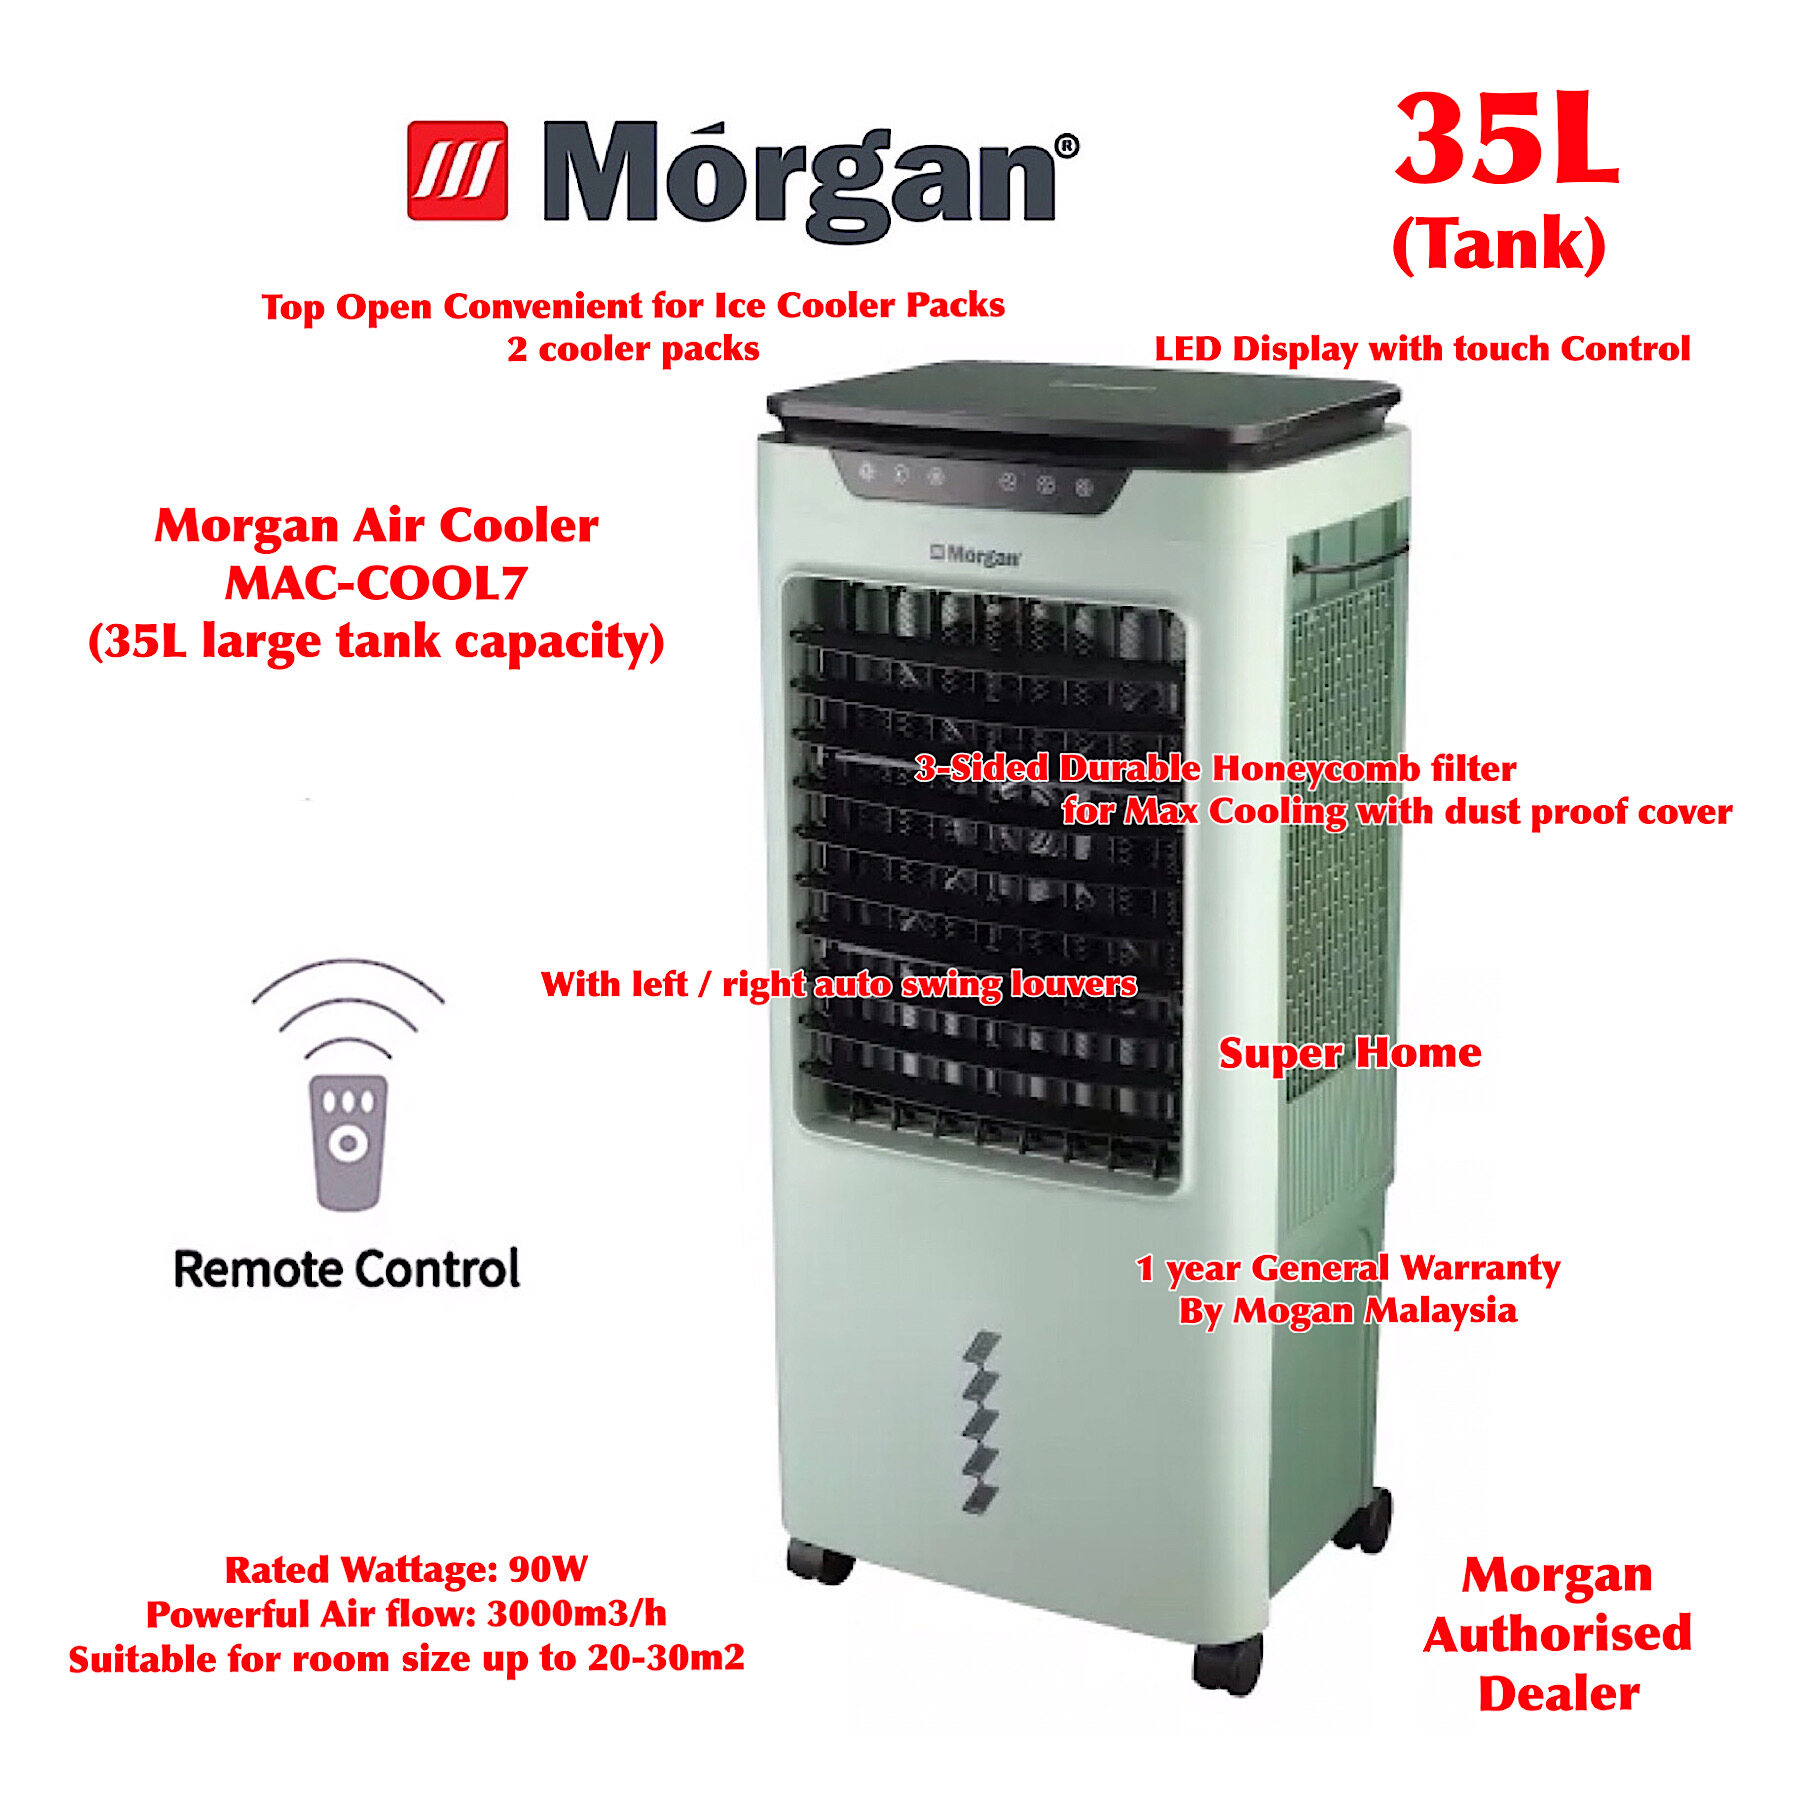 Morgan Air Cooler MAC-COOL7 Powerful Air flow 3000m³/h with Remote Control